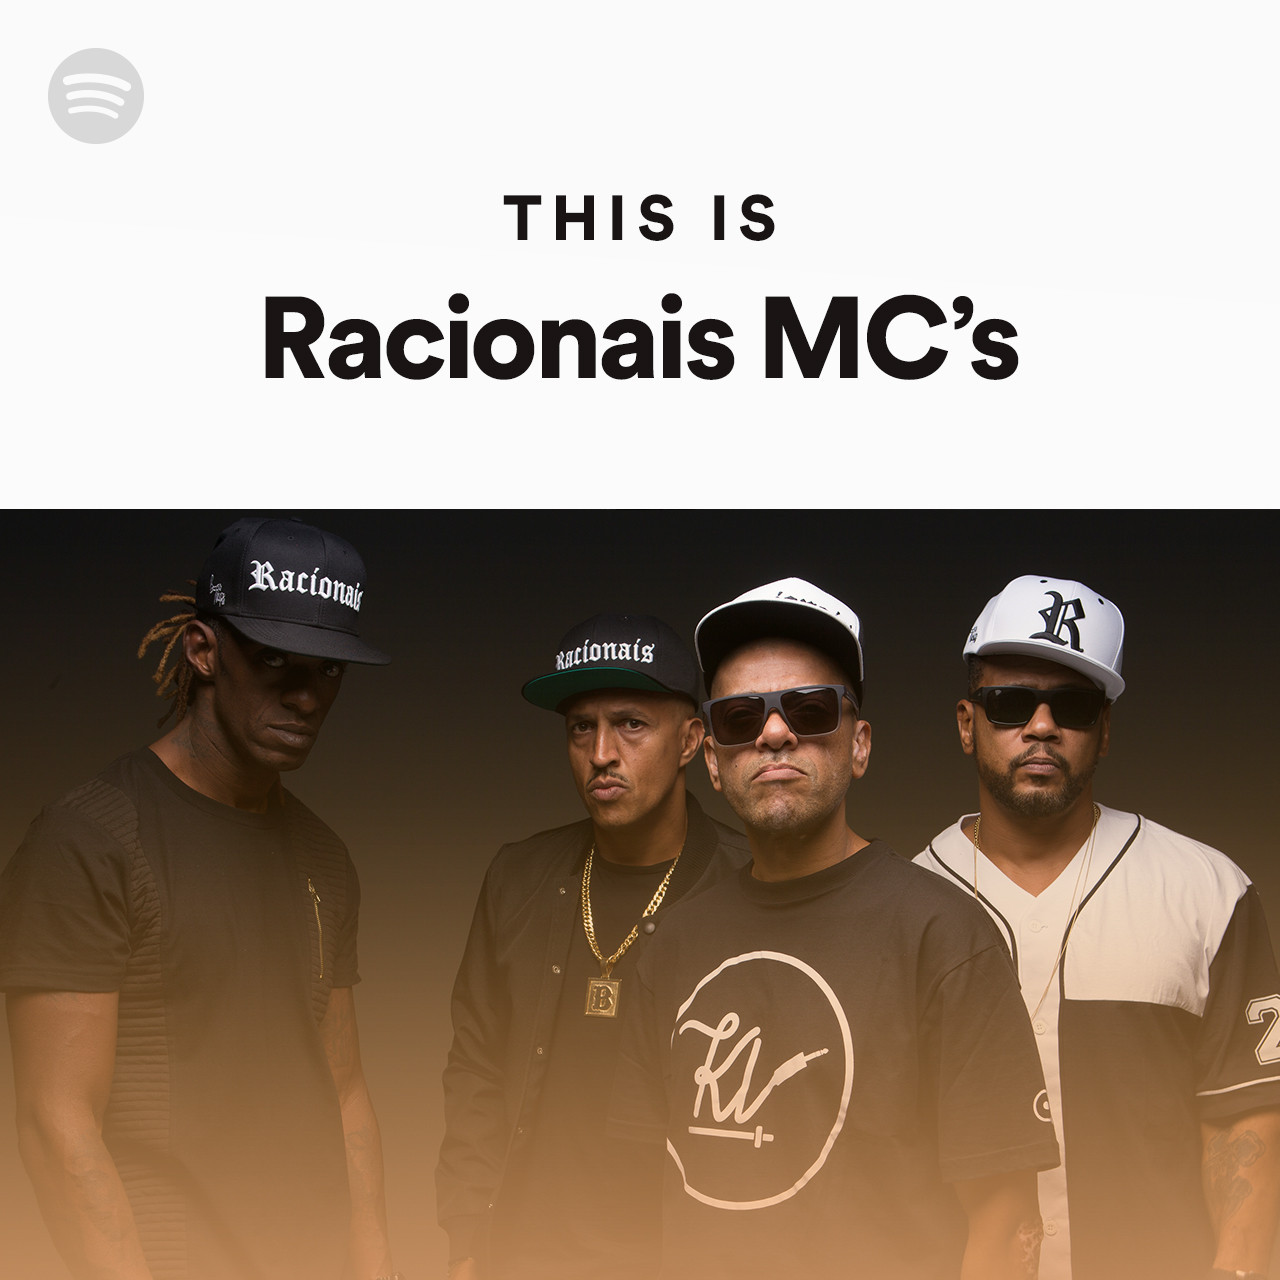 RACIONAIS MC'S on X:  / X